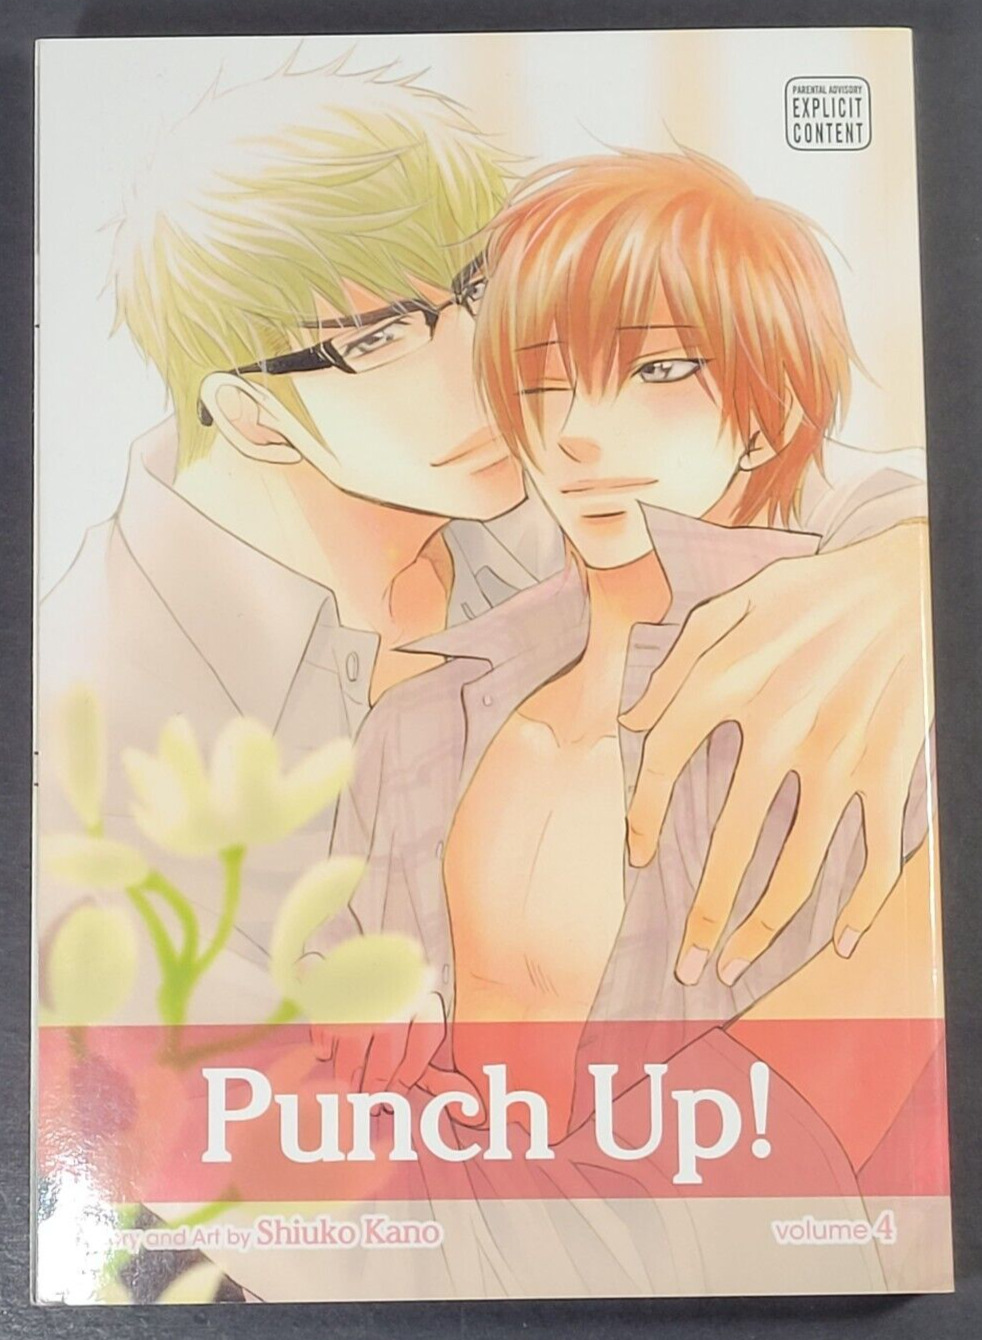 Manga - Punch Up Volume 4 - BL Yaoi - Shiuko Kano - NM - Sublime - 2013